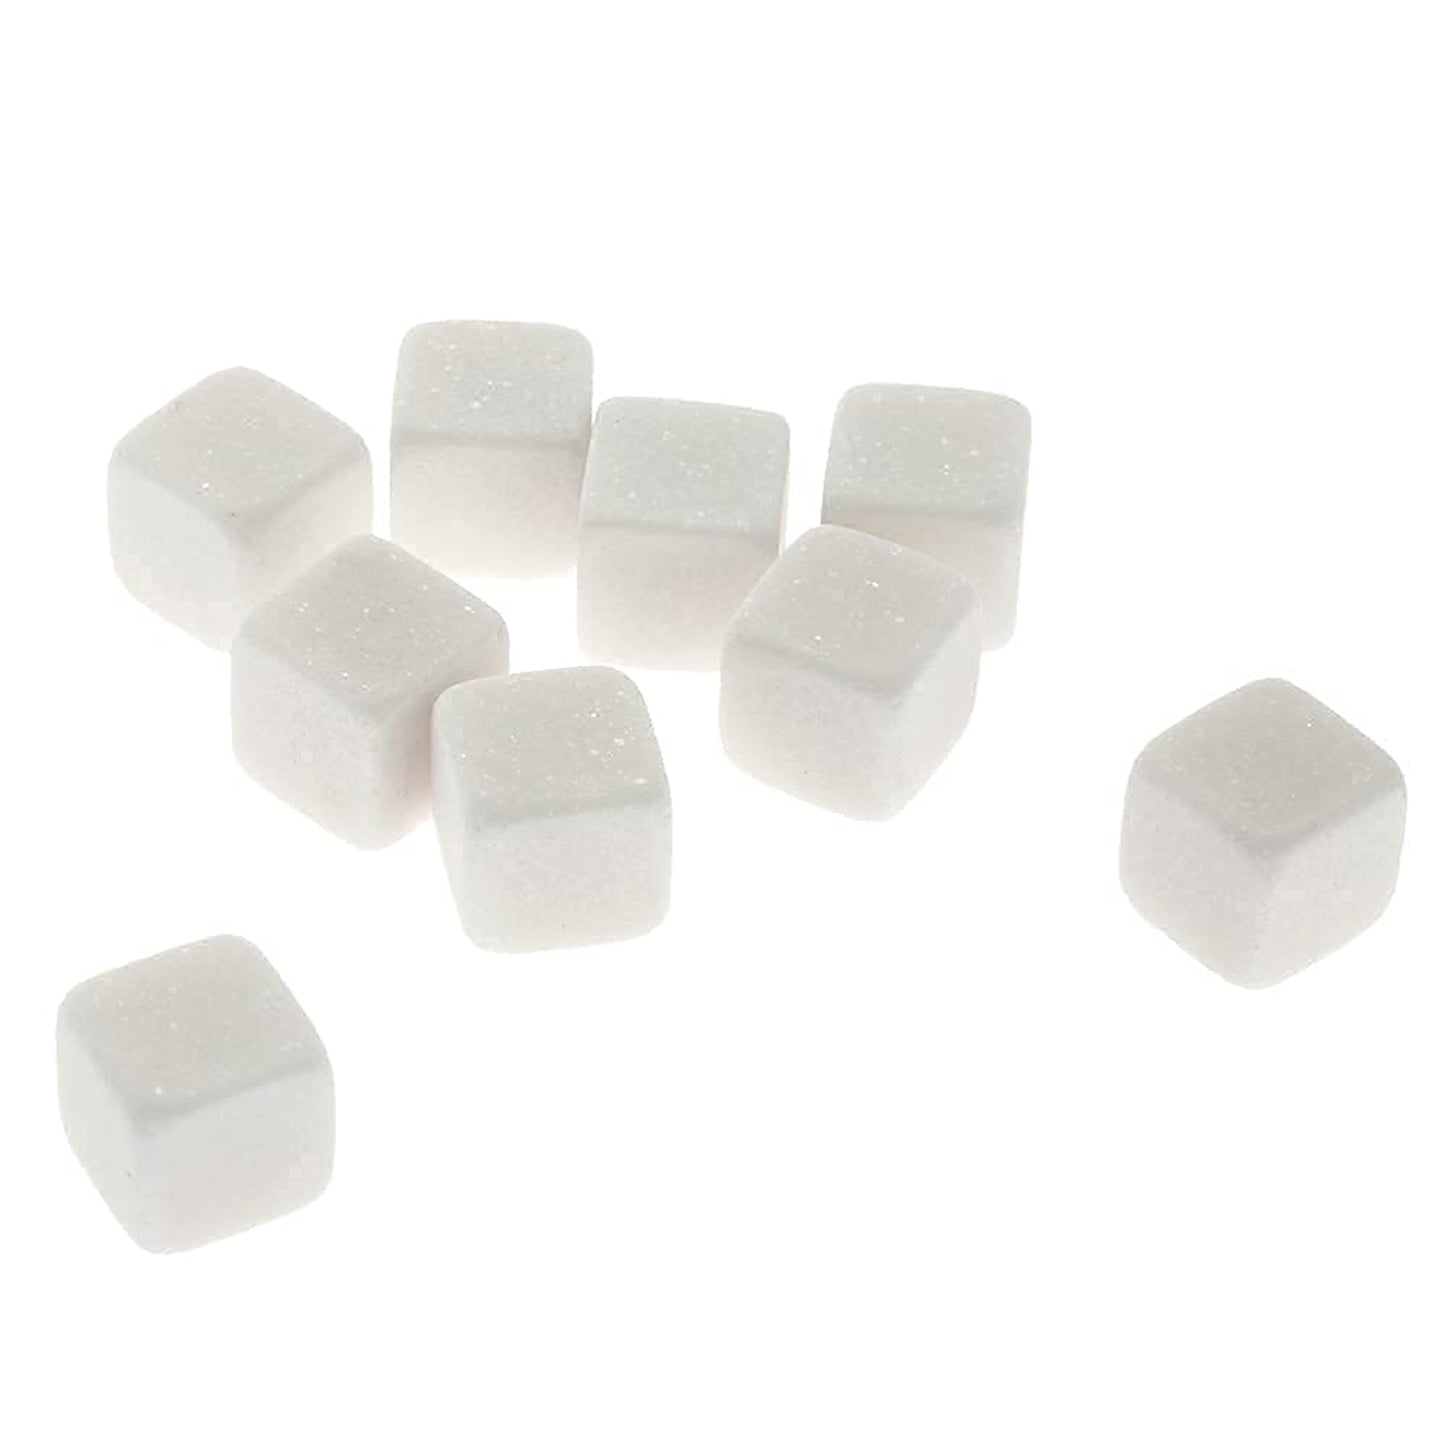 Whiskey Stones Set of 9 pcs with Velvet Bag | Chilling Rocks Drinks Cooler Cubes | Reusable Drink Chilling Cubes